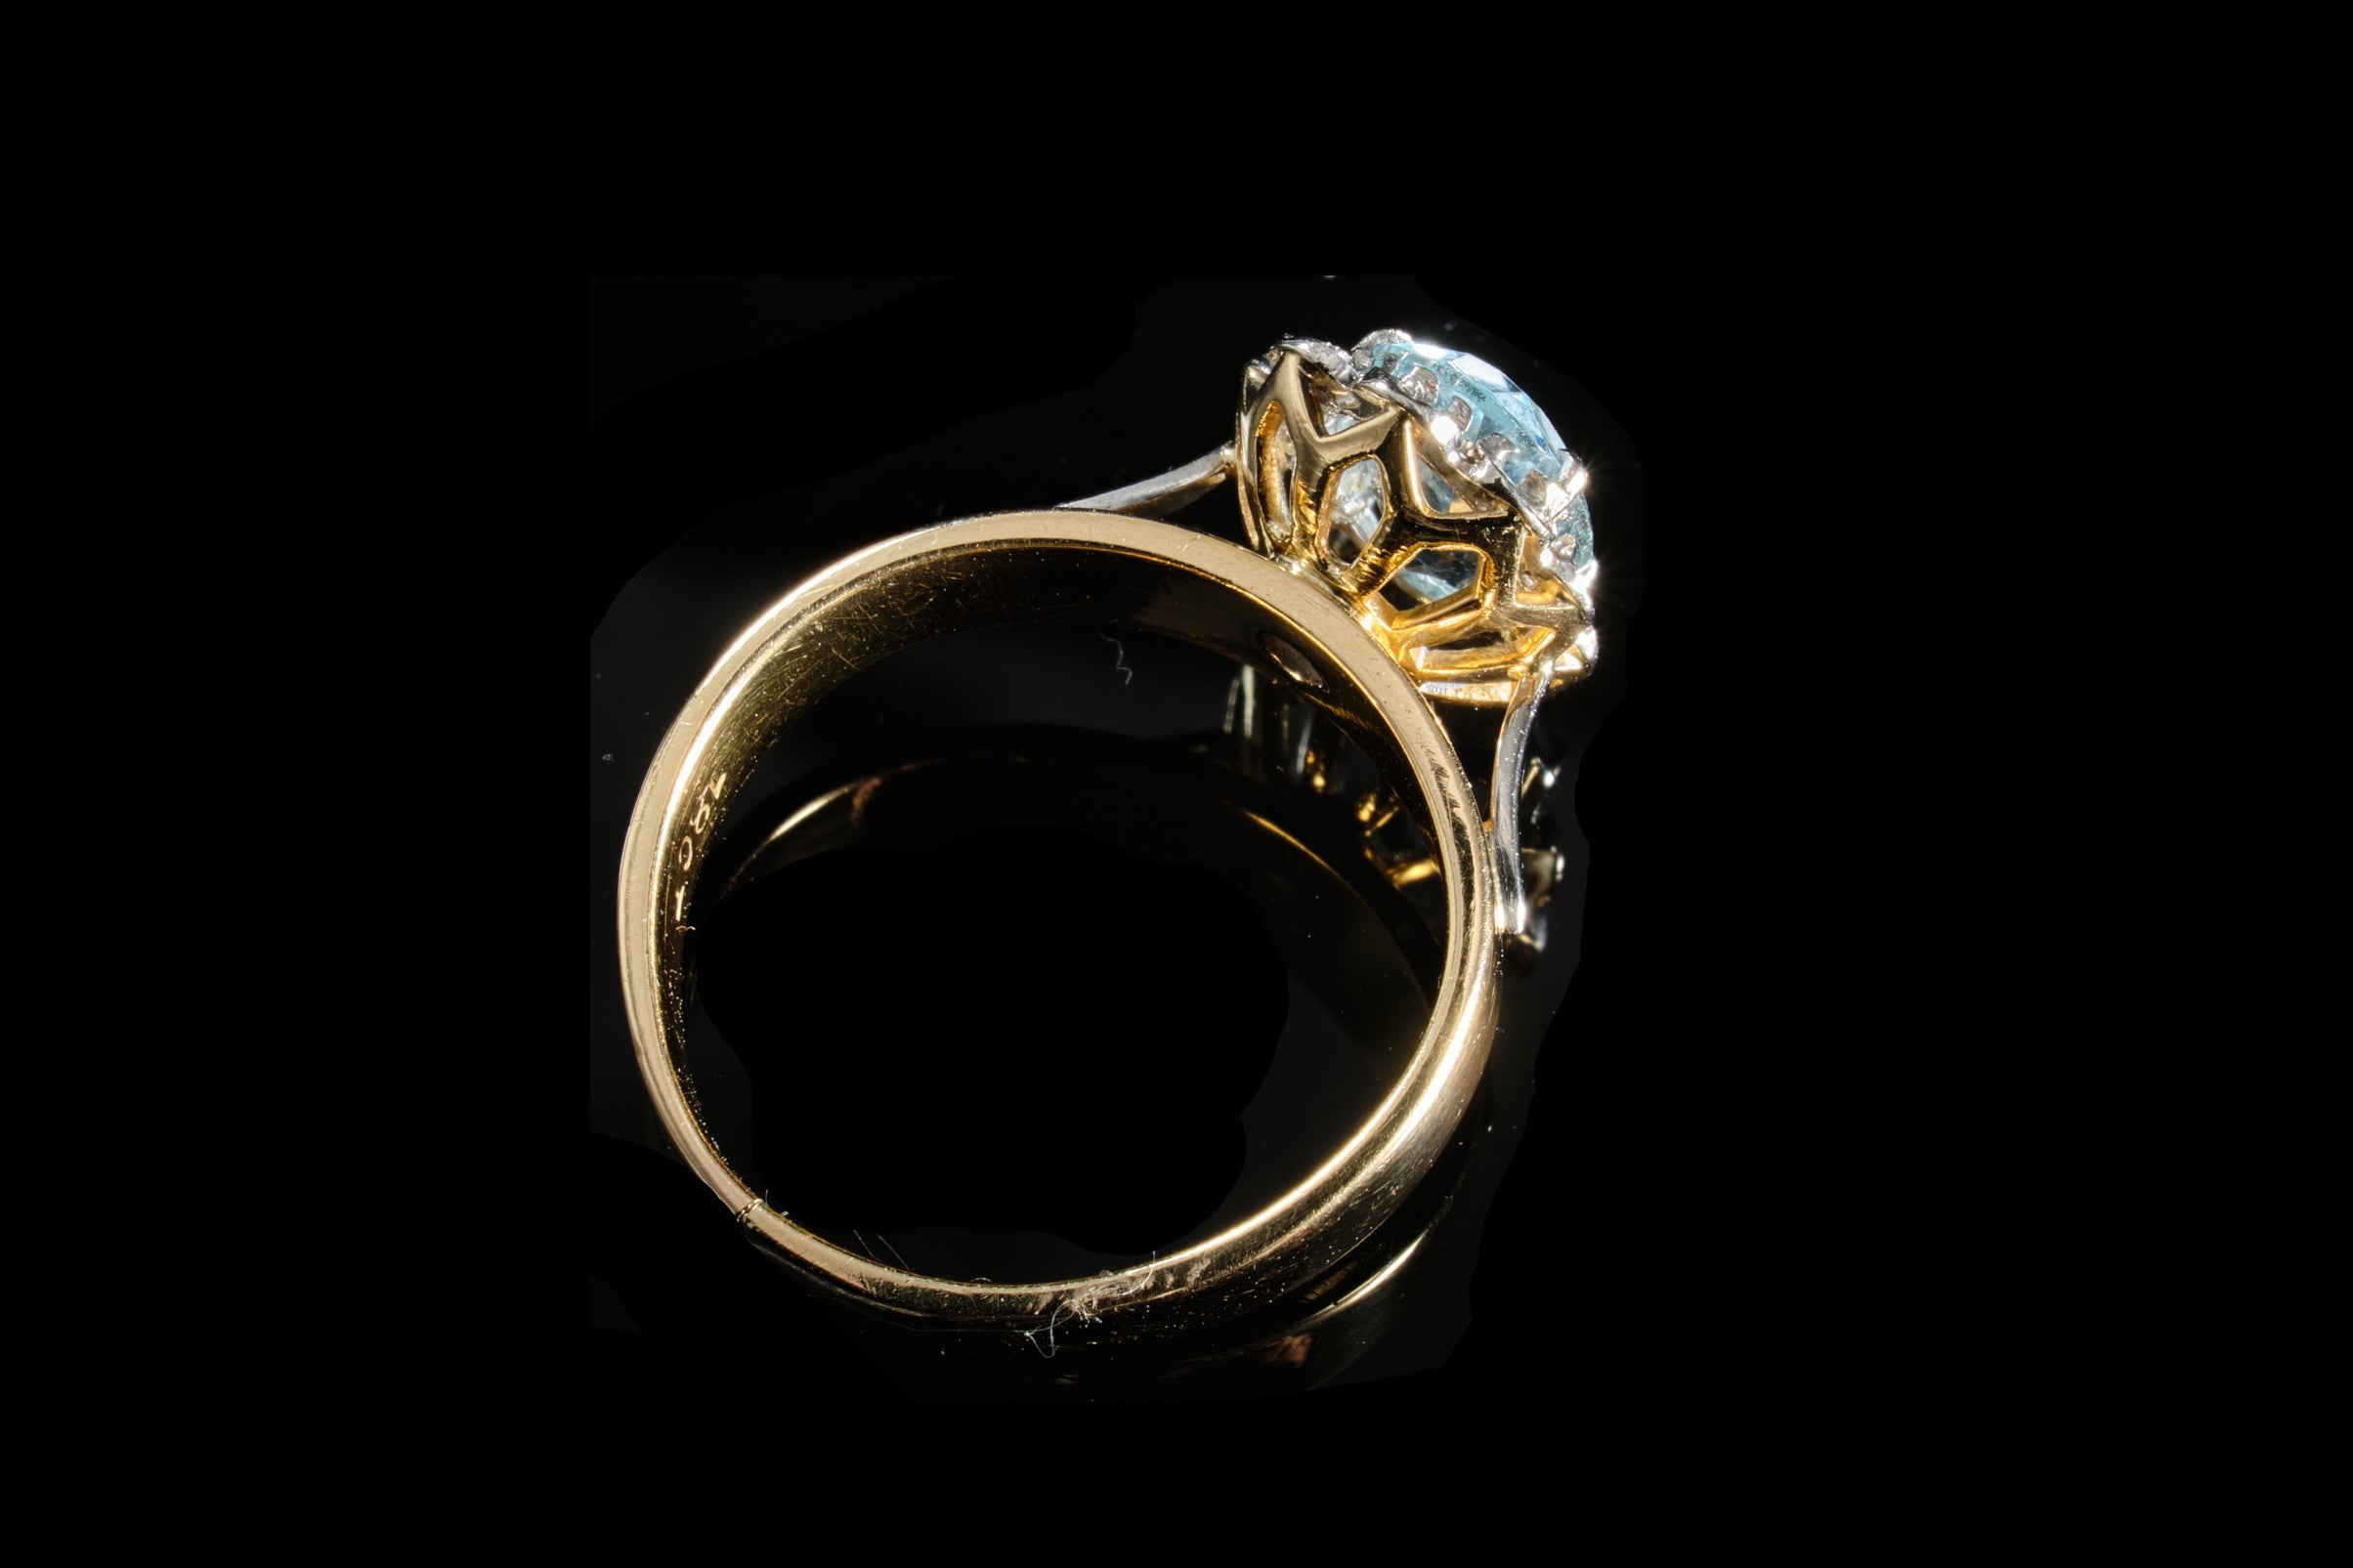 Vintage Aquamarine Ring set in 18ct Gold.